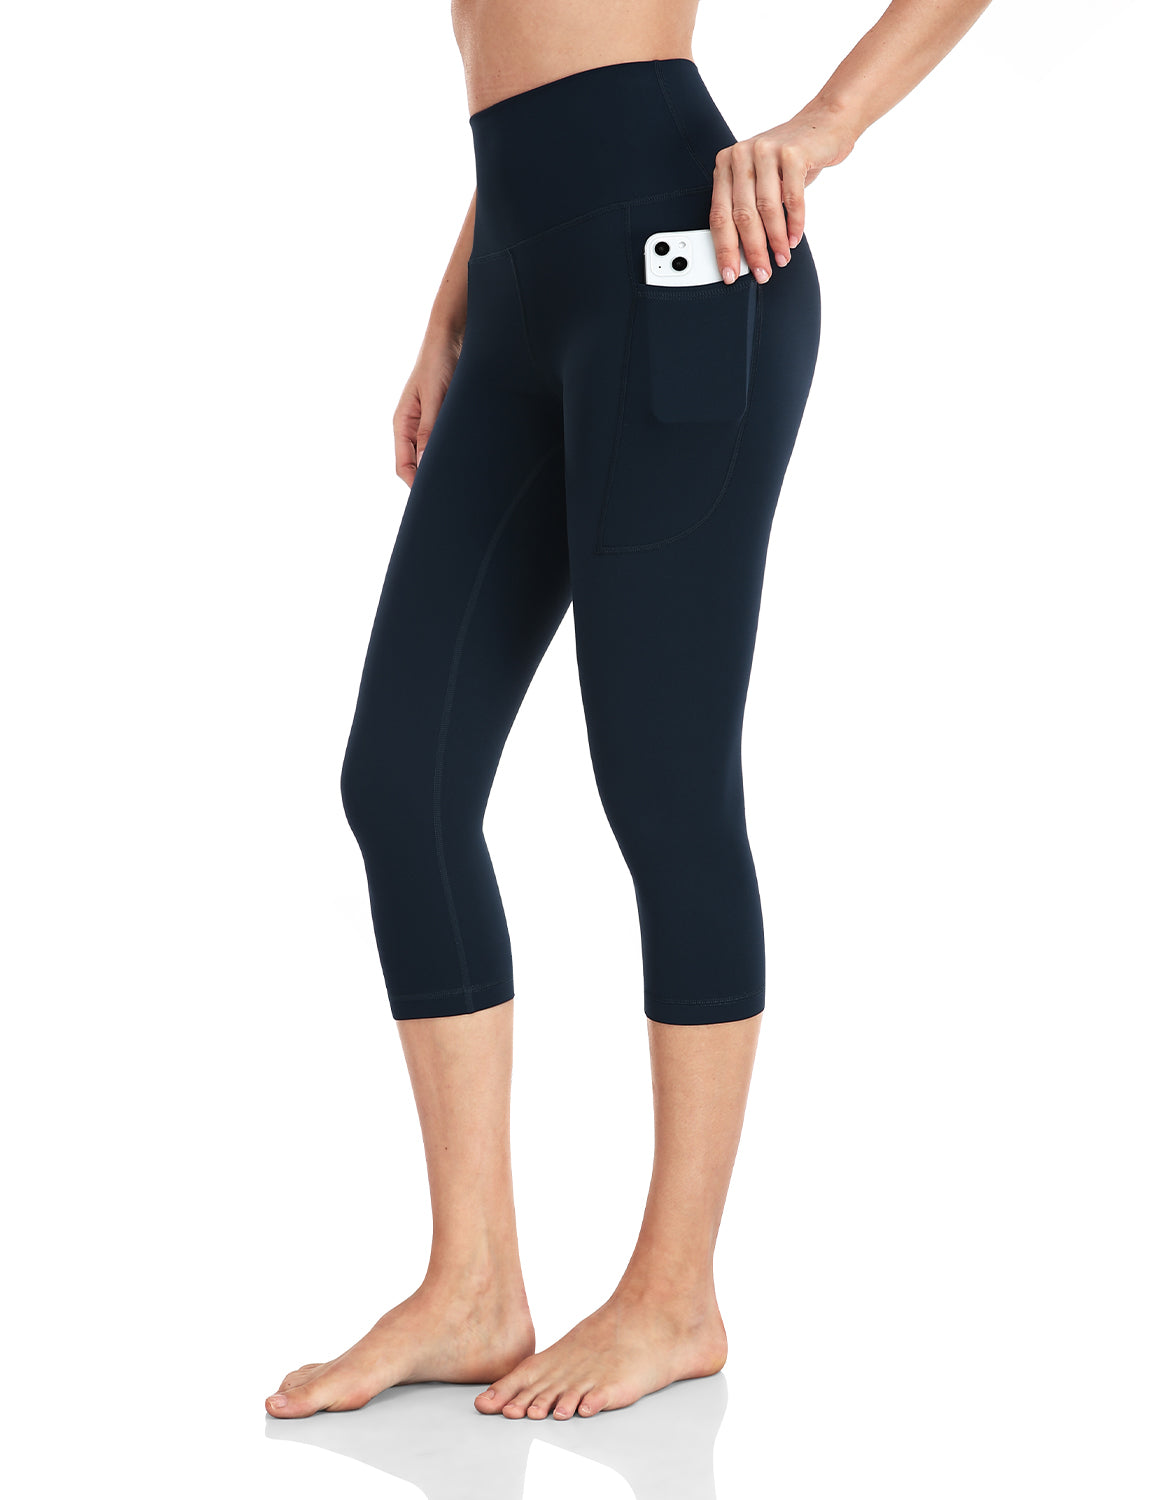 Xersion womens fitted capri leggings with side leg pockets plum color size  small | Clothes design, Capri leggings, Women